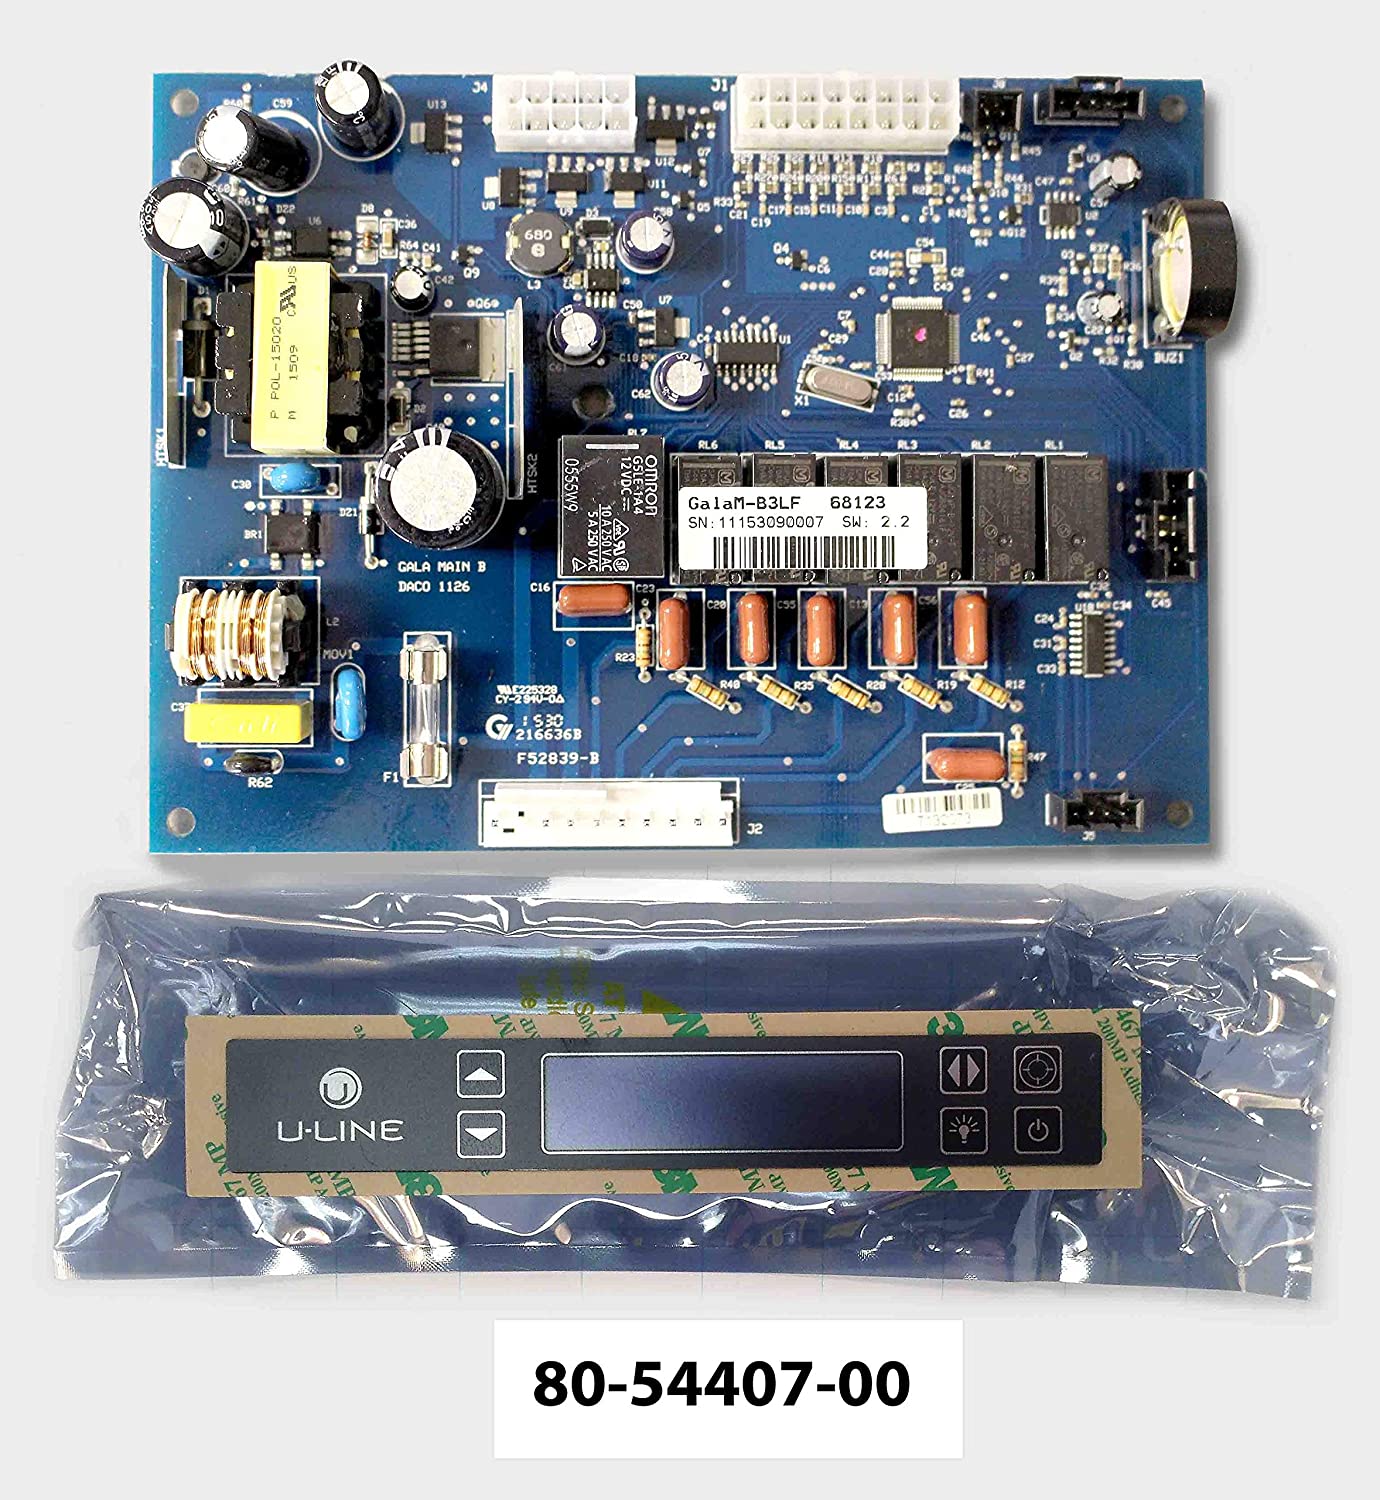 80-54407-00 Control Board - Samsung Parts USA